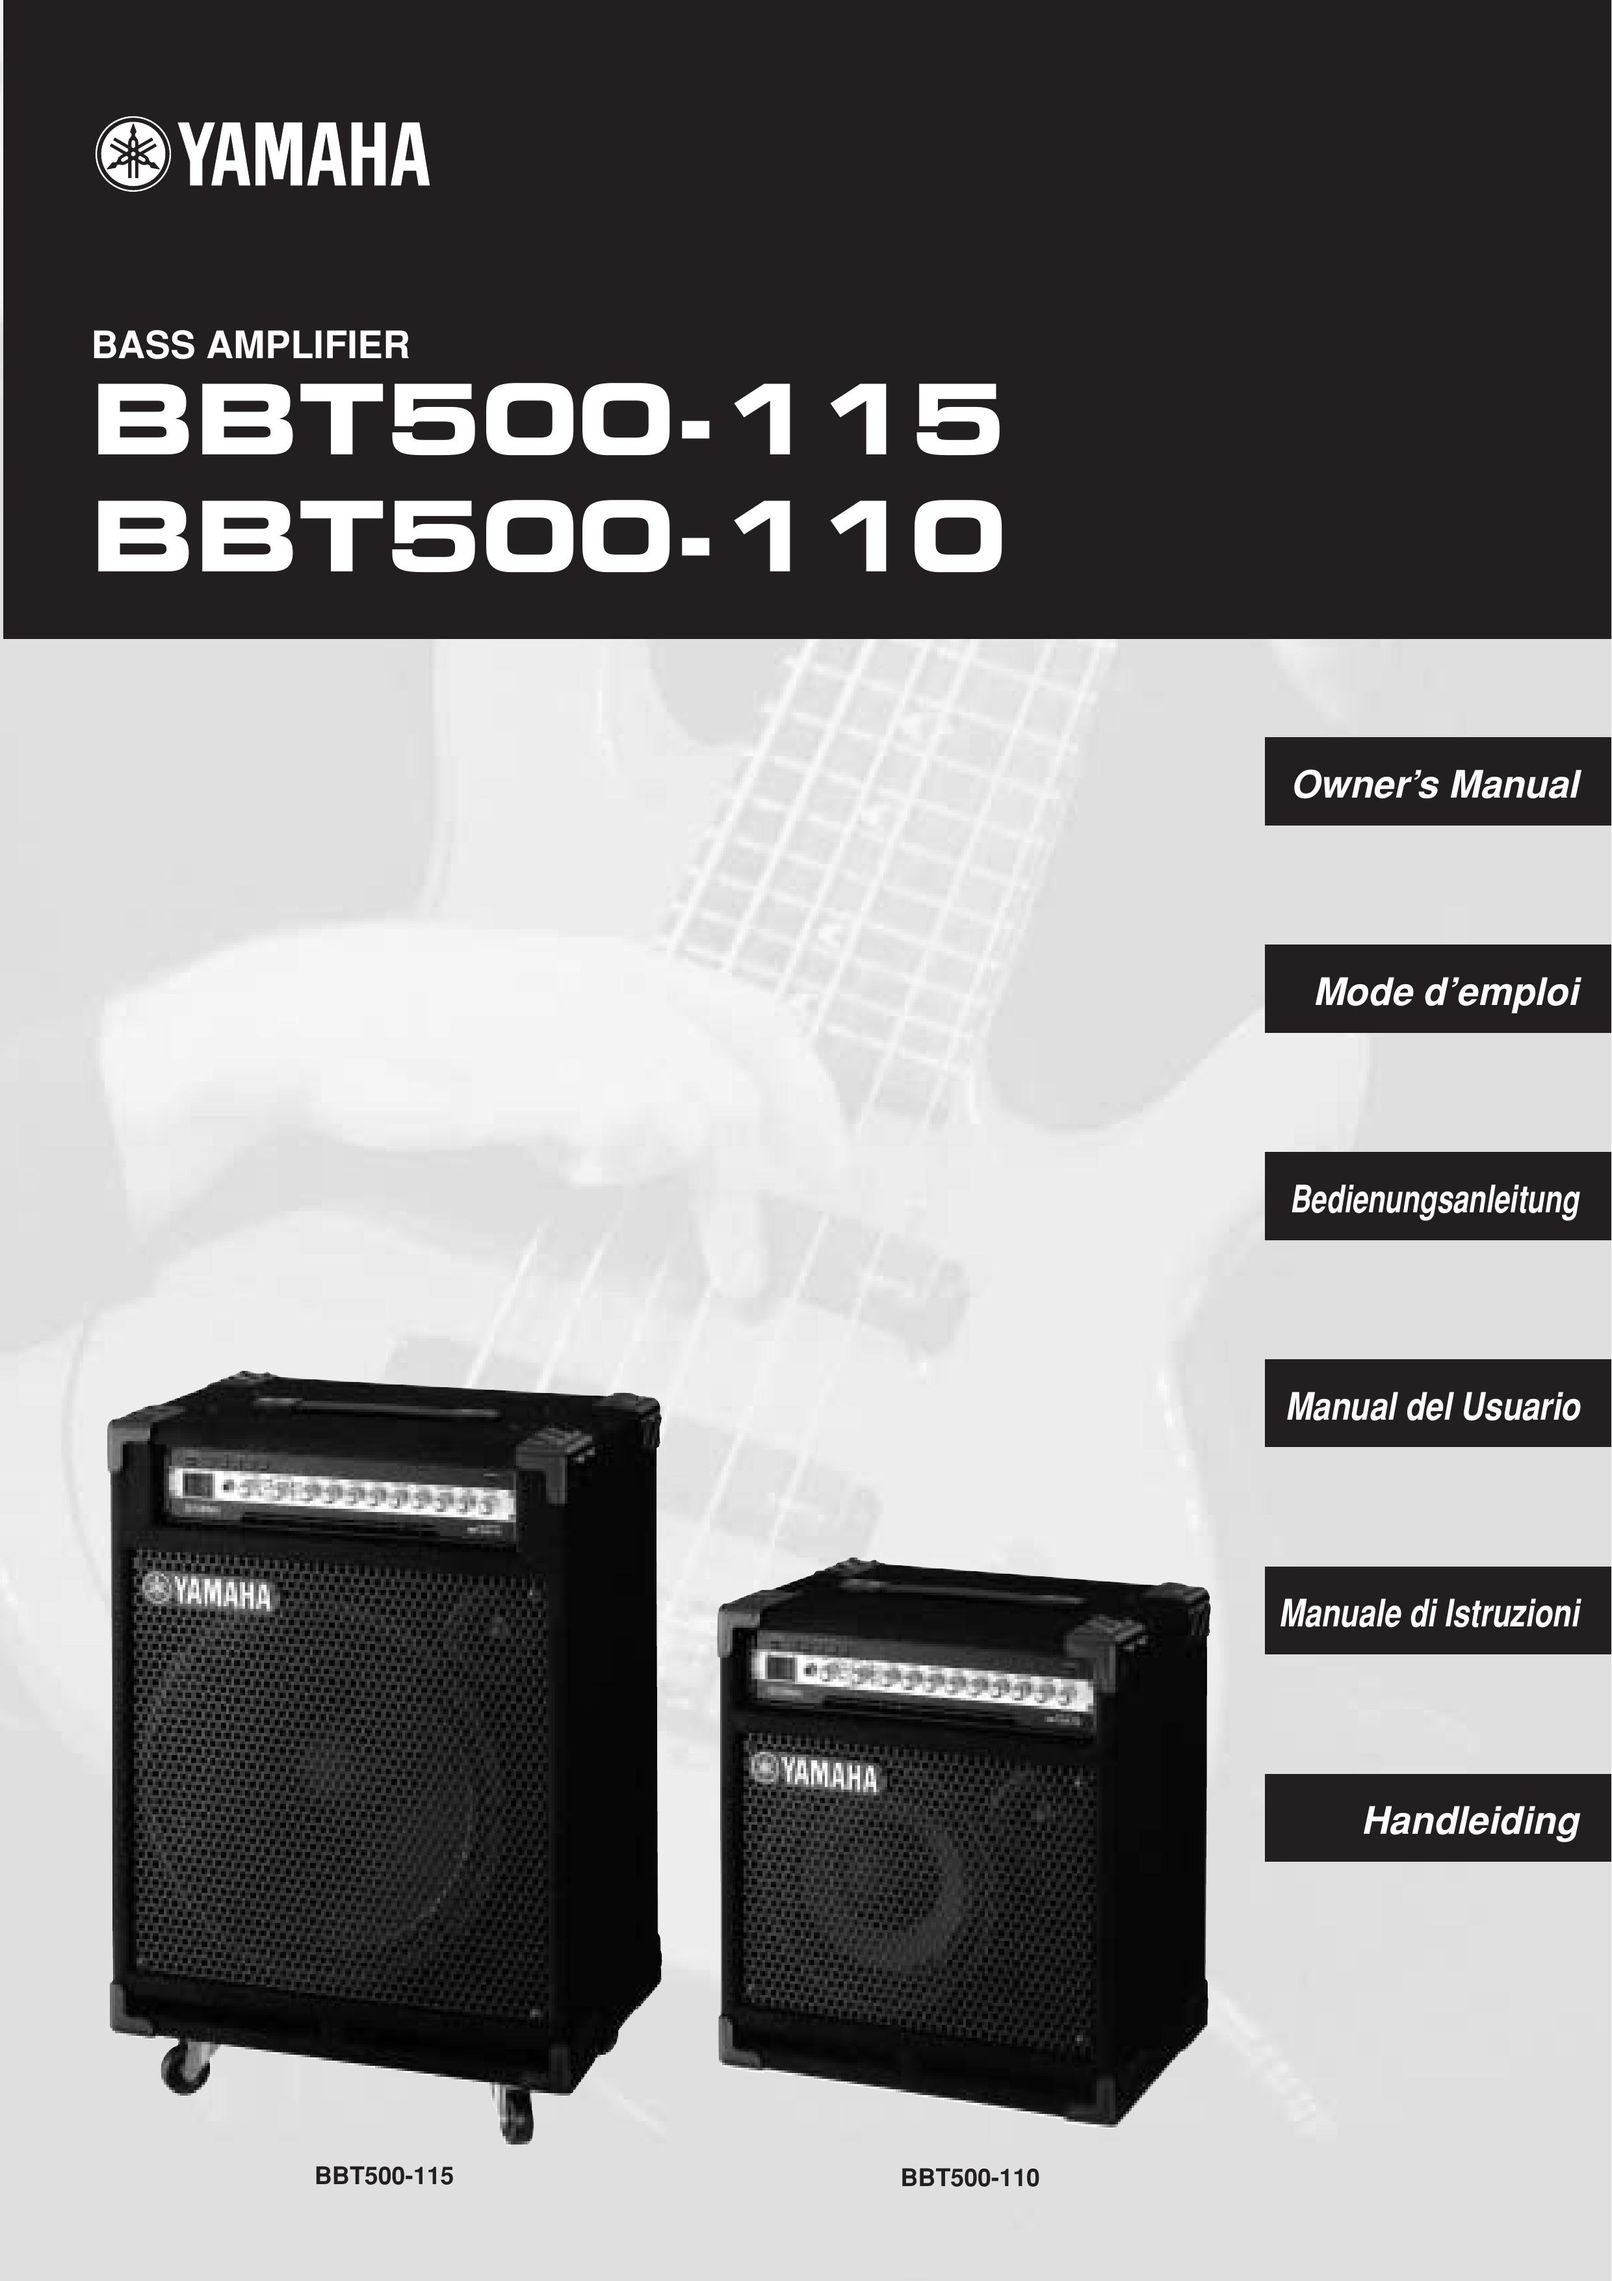 Yamaha BBT500-110 Stereo Amplifier User Manual